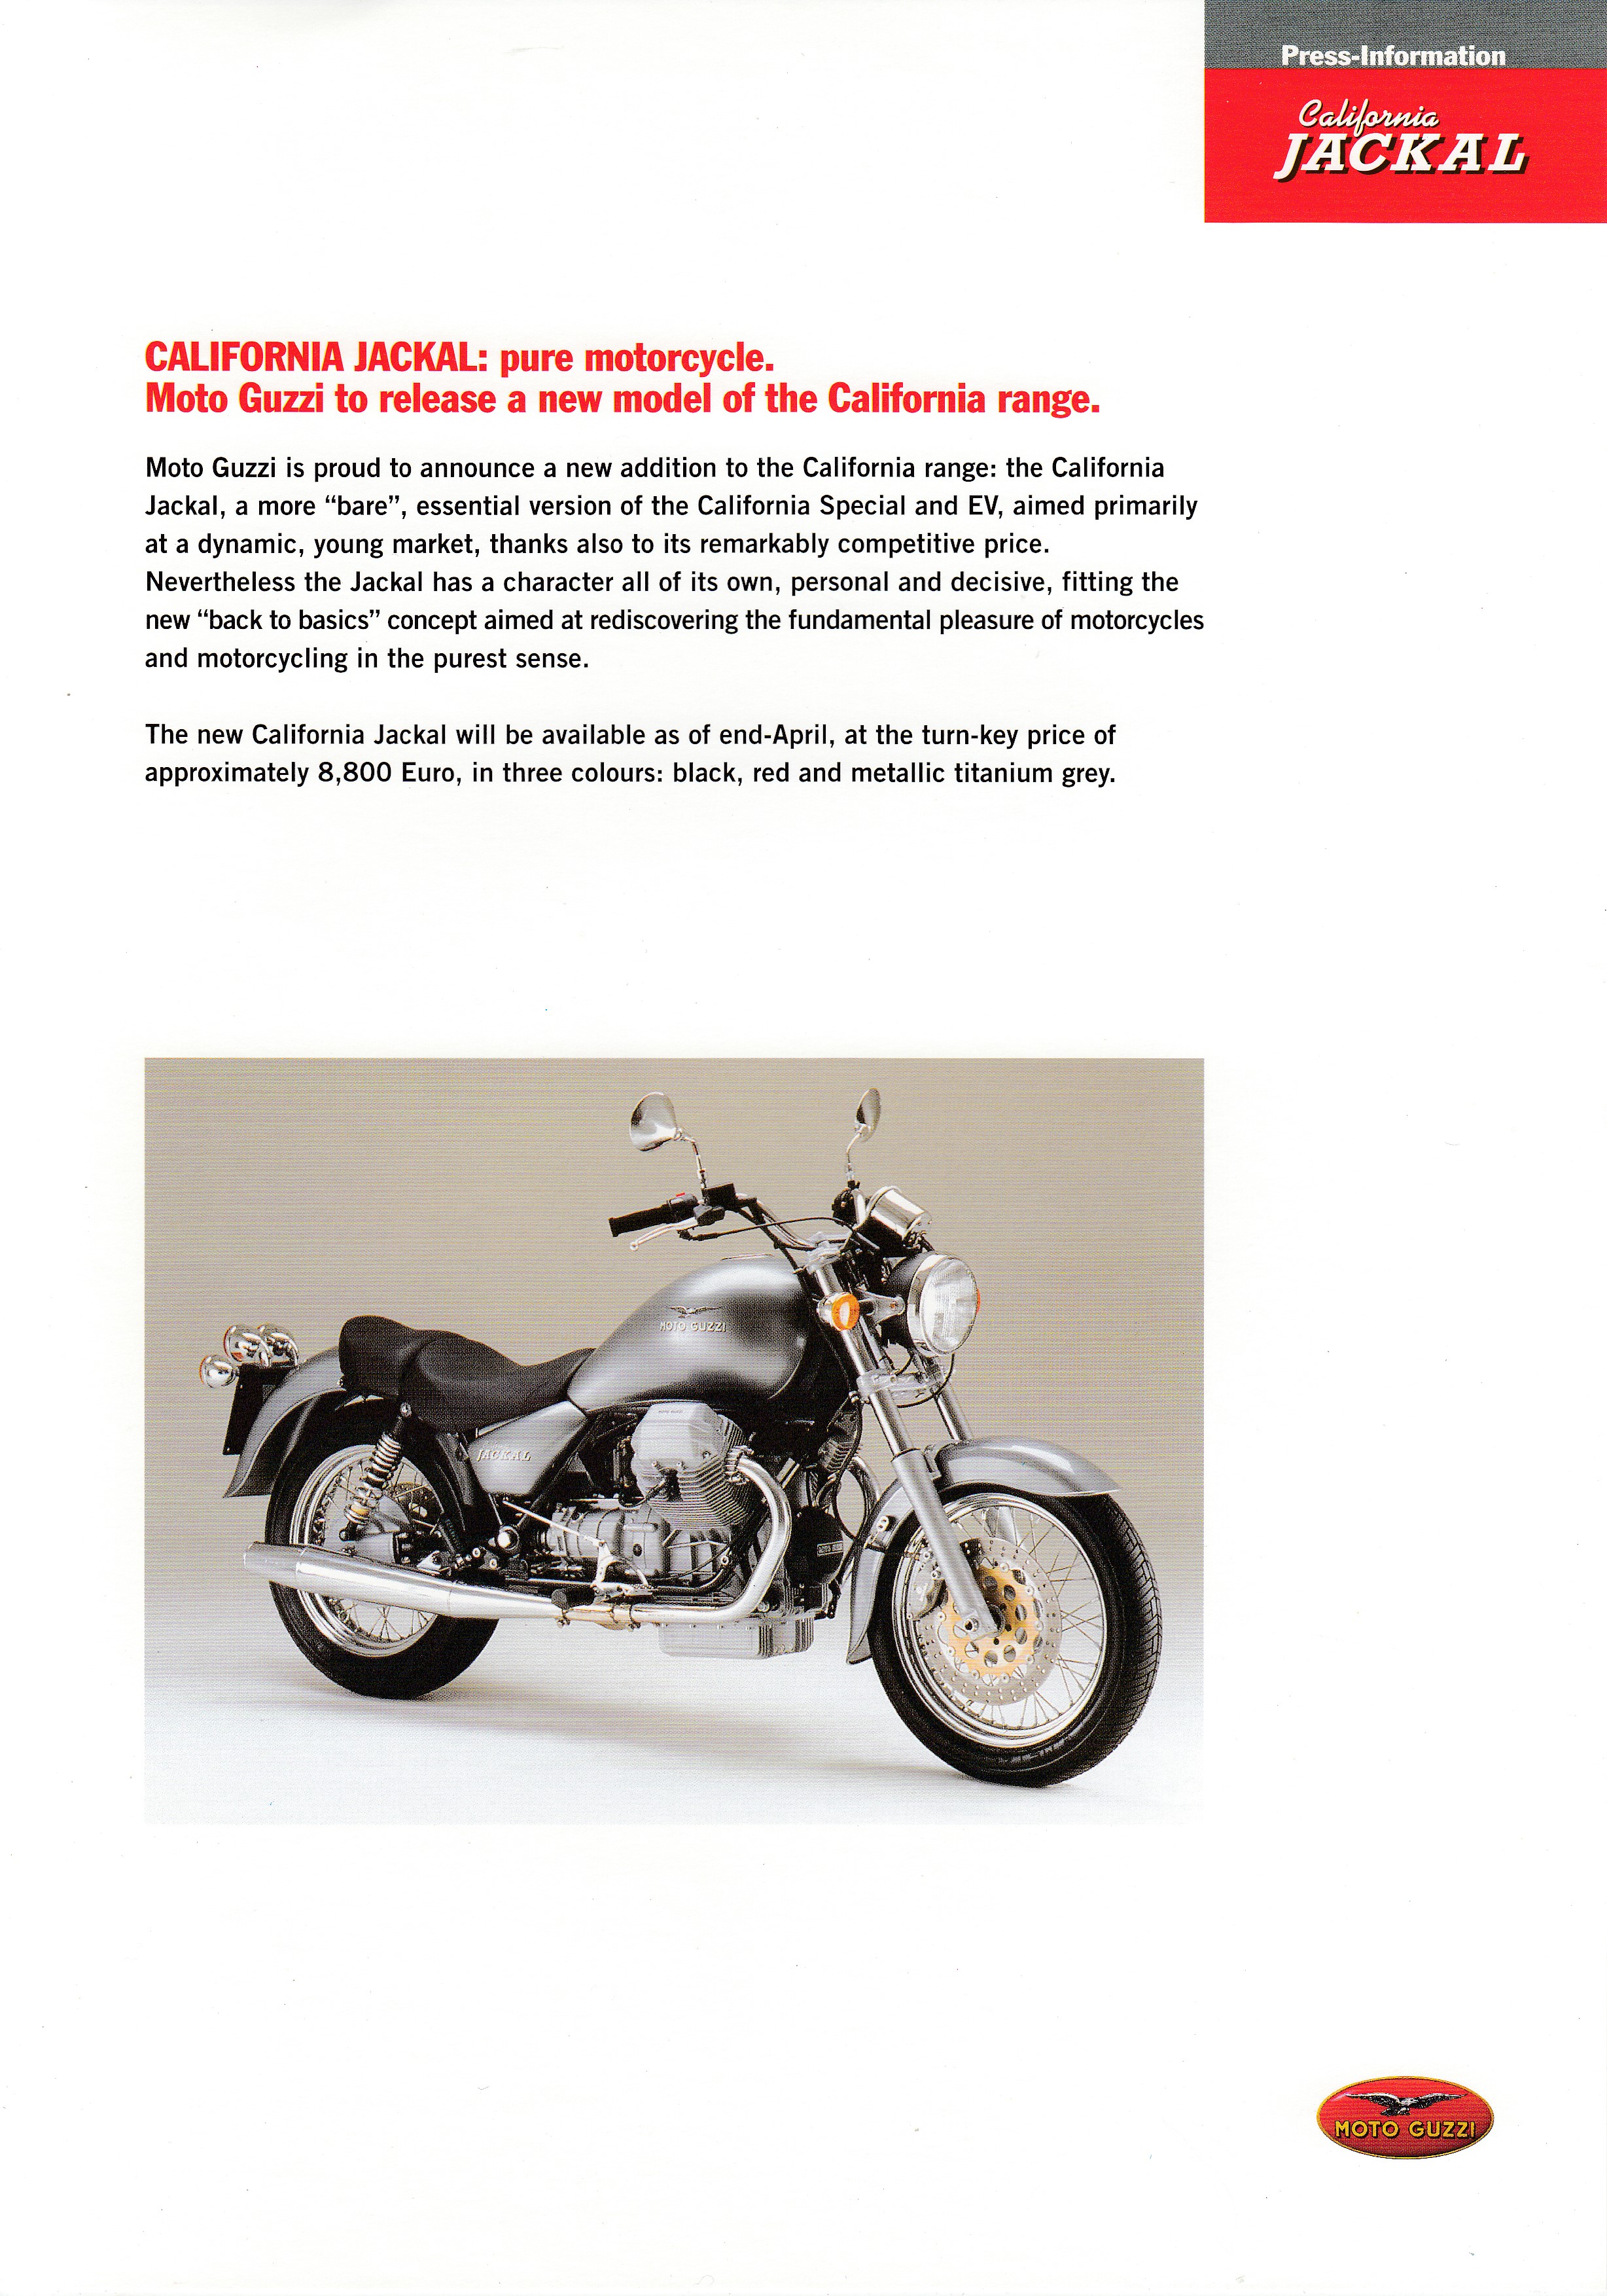 Press release - Moto Guzzi California Jackal